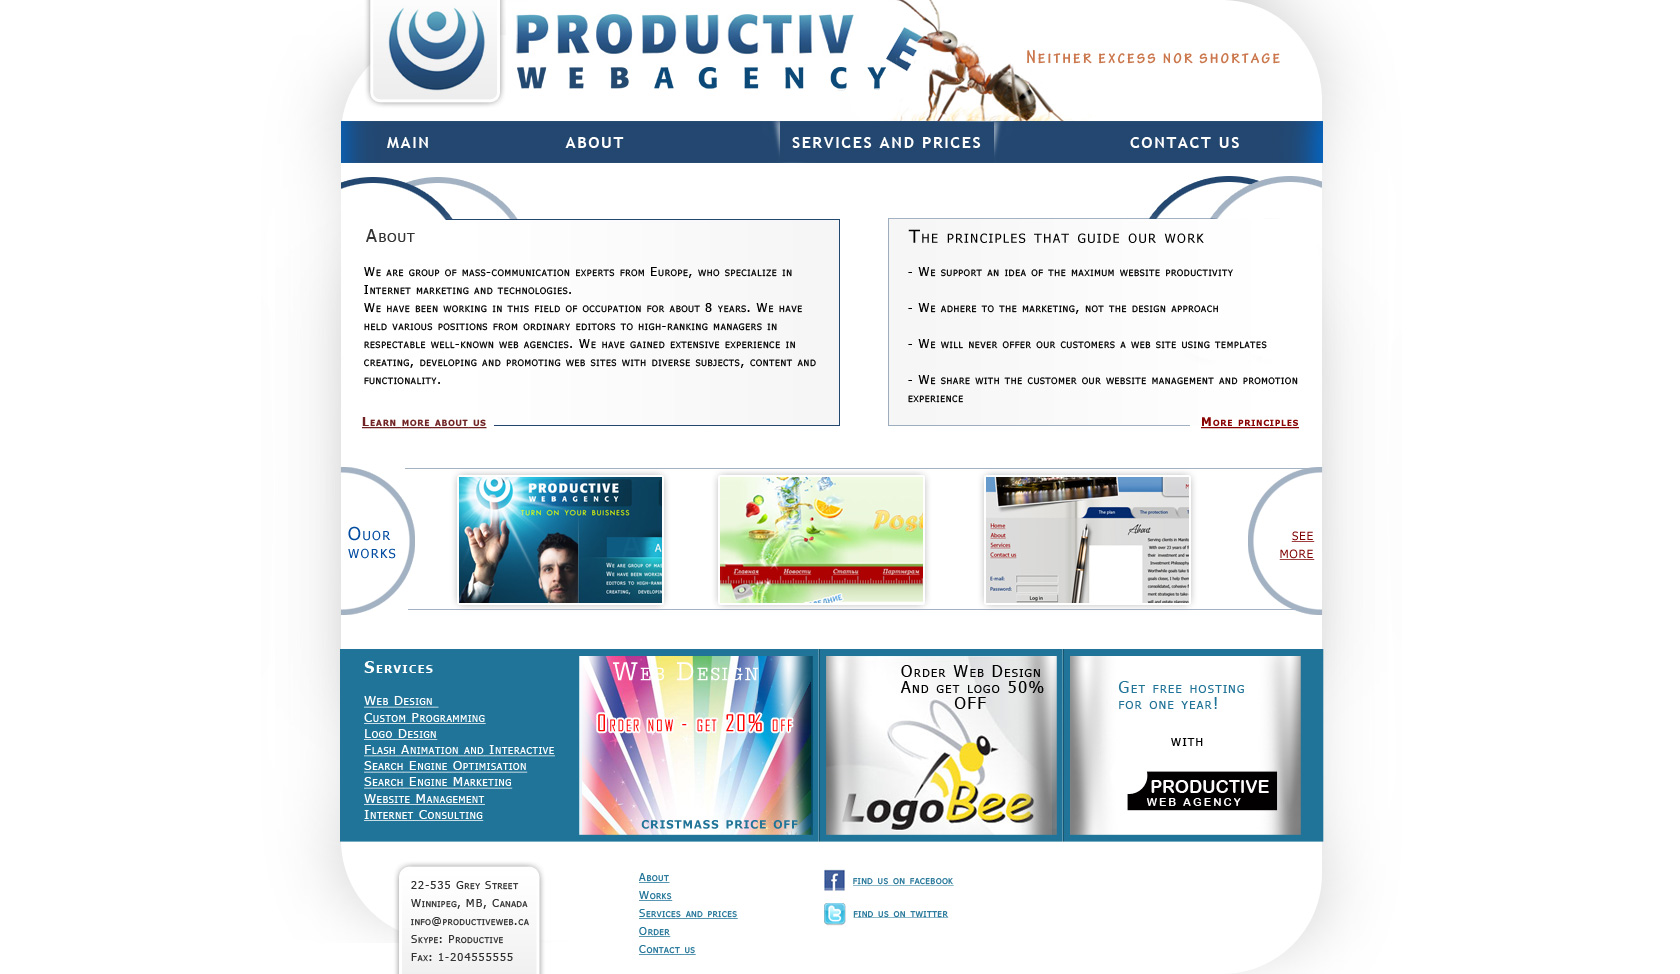 Productive web agency